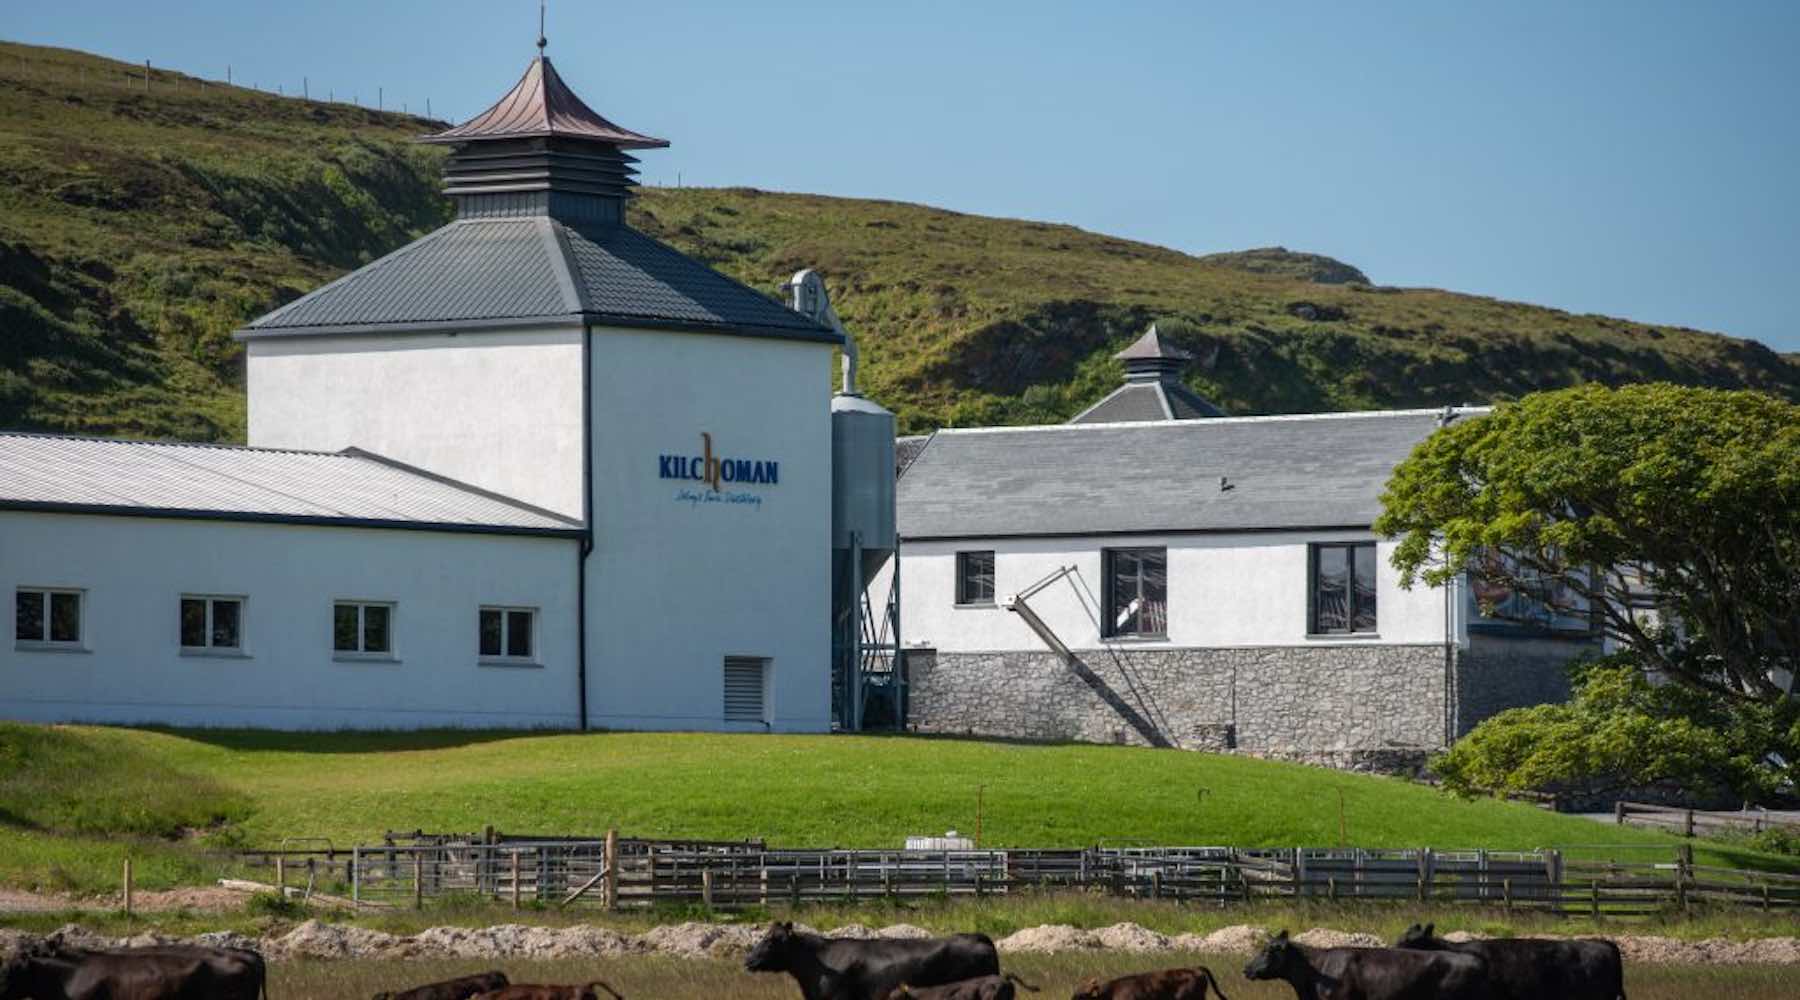 Kilchoman Distillery: A Farm-to-Glass Experience on the Isle of Islay